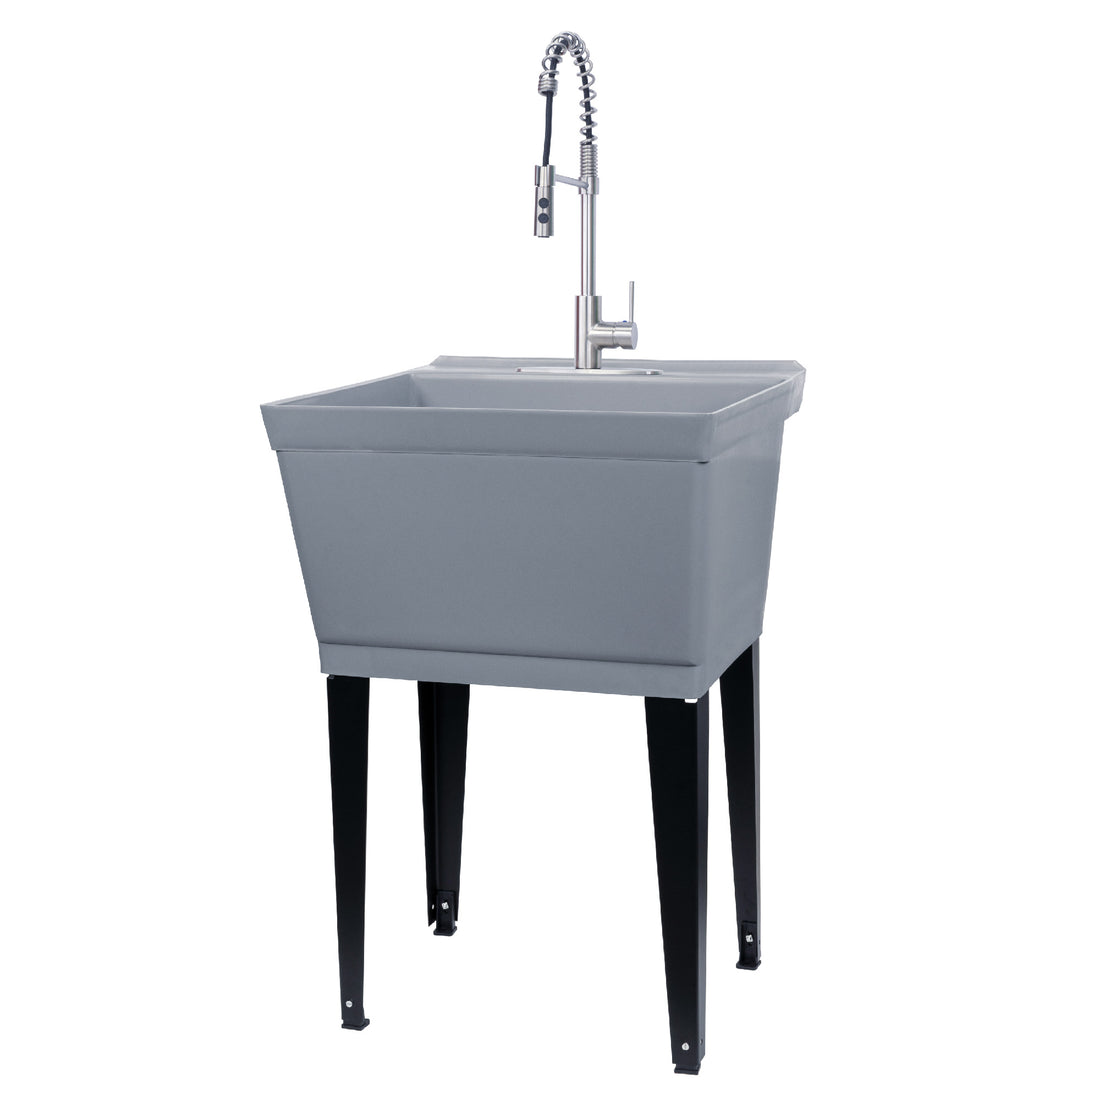 Tehila Standard Freestanding Grey Utility Sink with Stainless Steel Finish High-Arc Coil Pull-Down Faucet - Utility sinks vanites Tehila